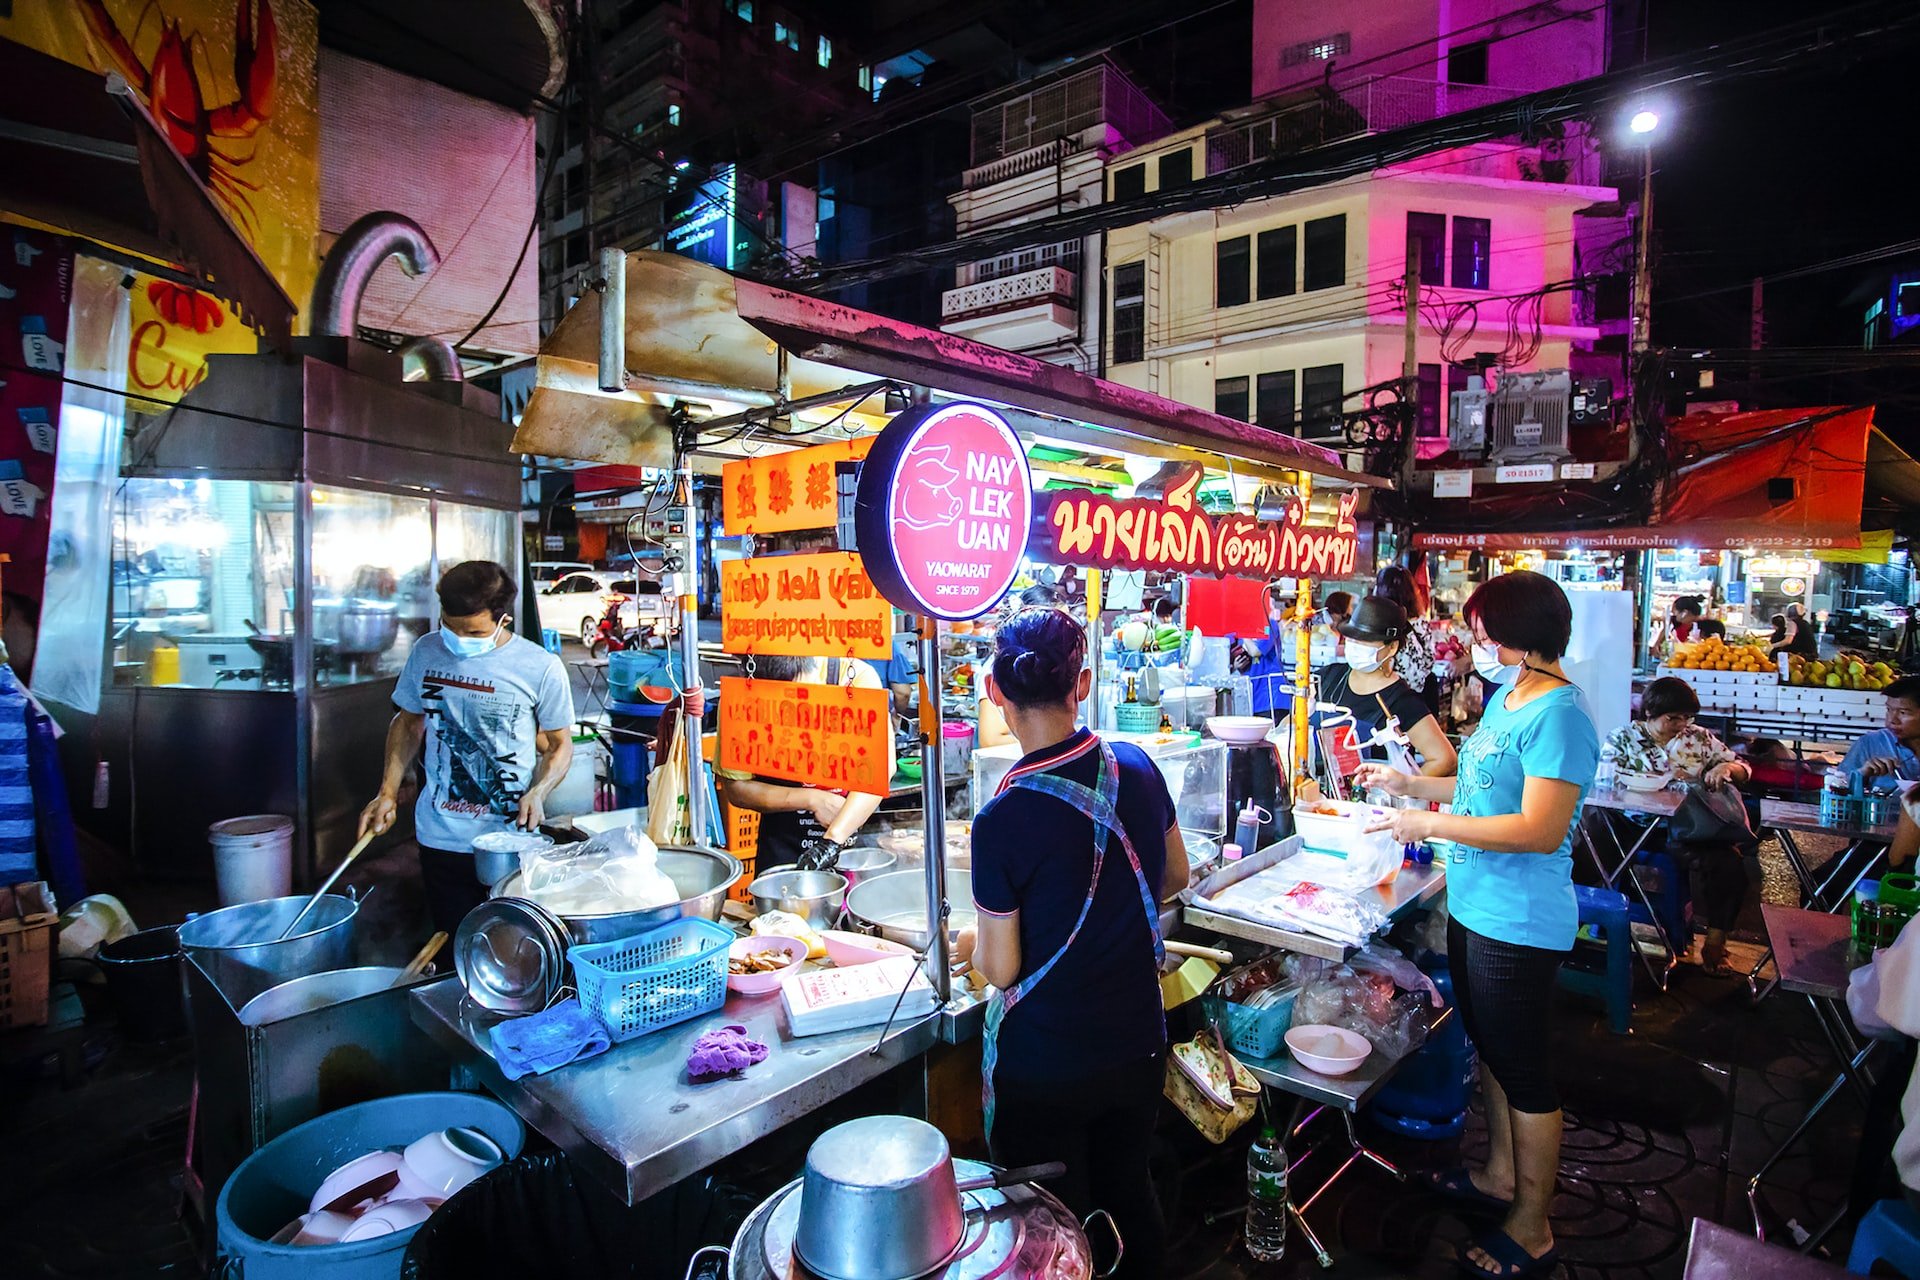 A street food scene in Bangkok at night.